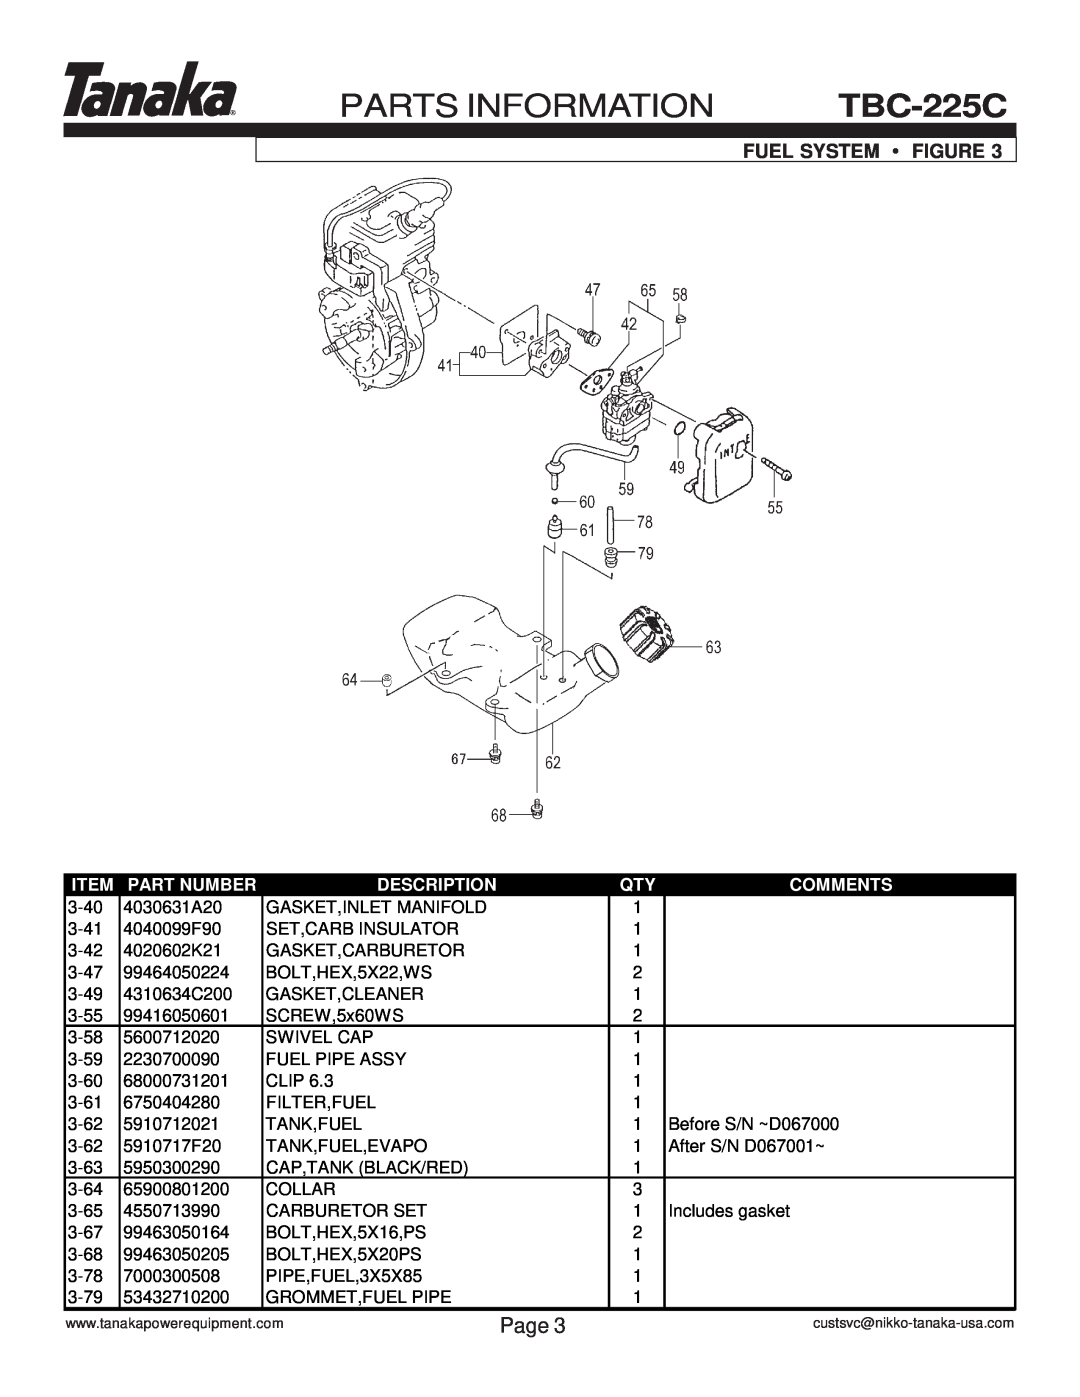 Tanaka TBC-225C manual Parts Information, Fuel System Figure, Page, Part Number, Description, Comments 